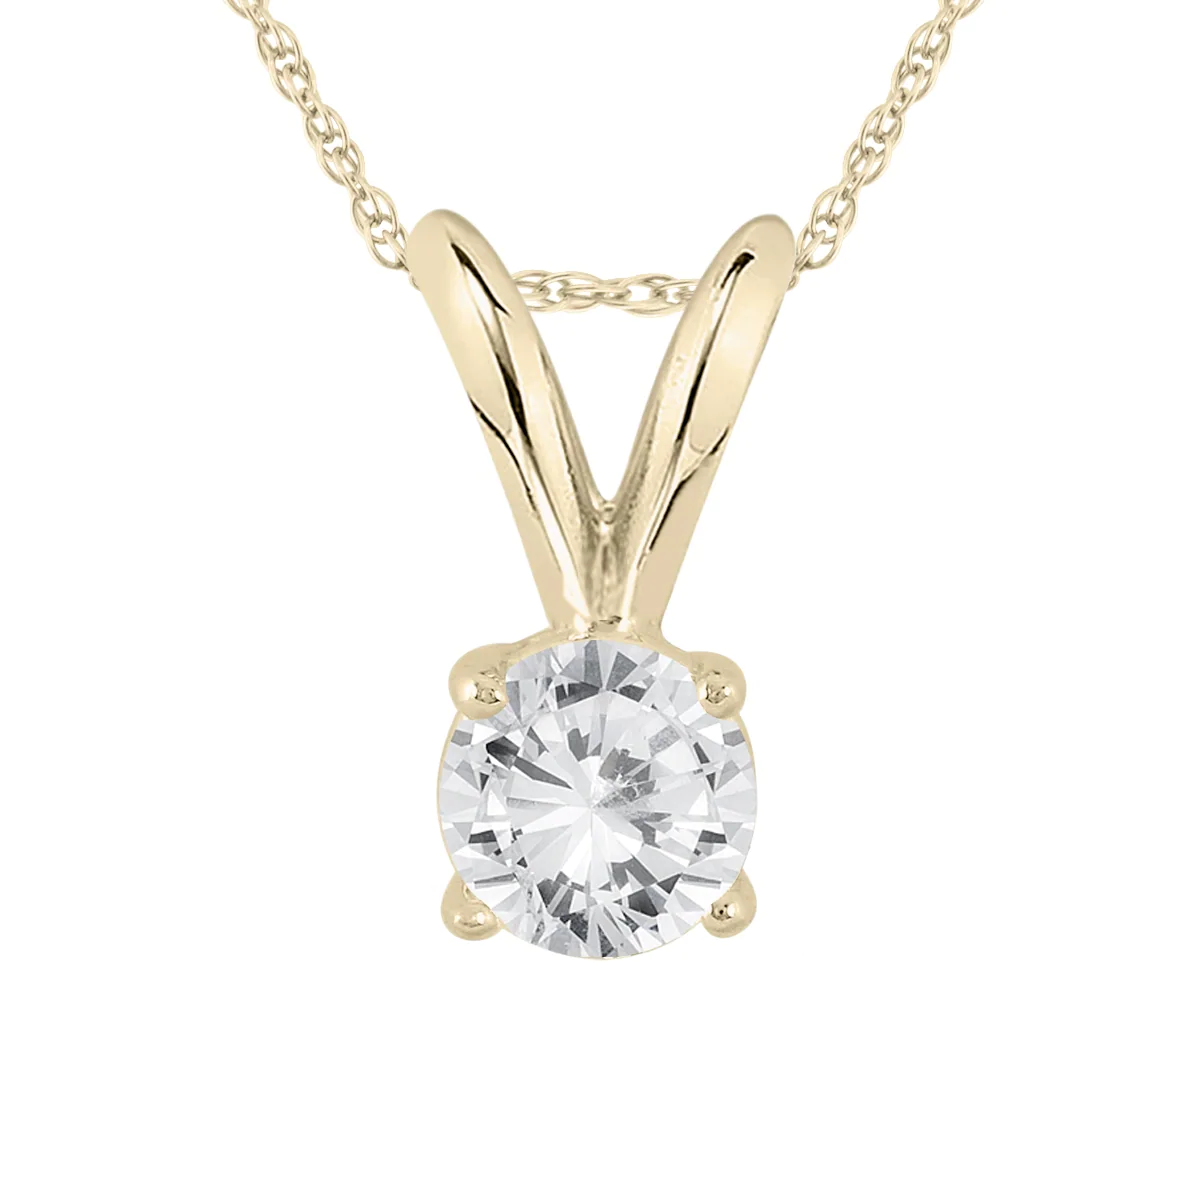  14K Yellow Gold Diamond Solitaire Pendant Necklace